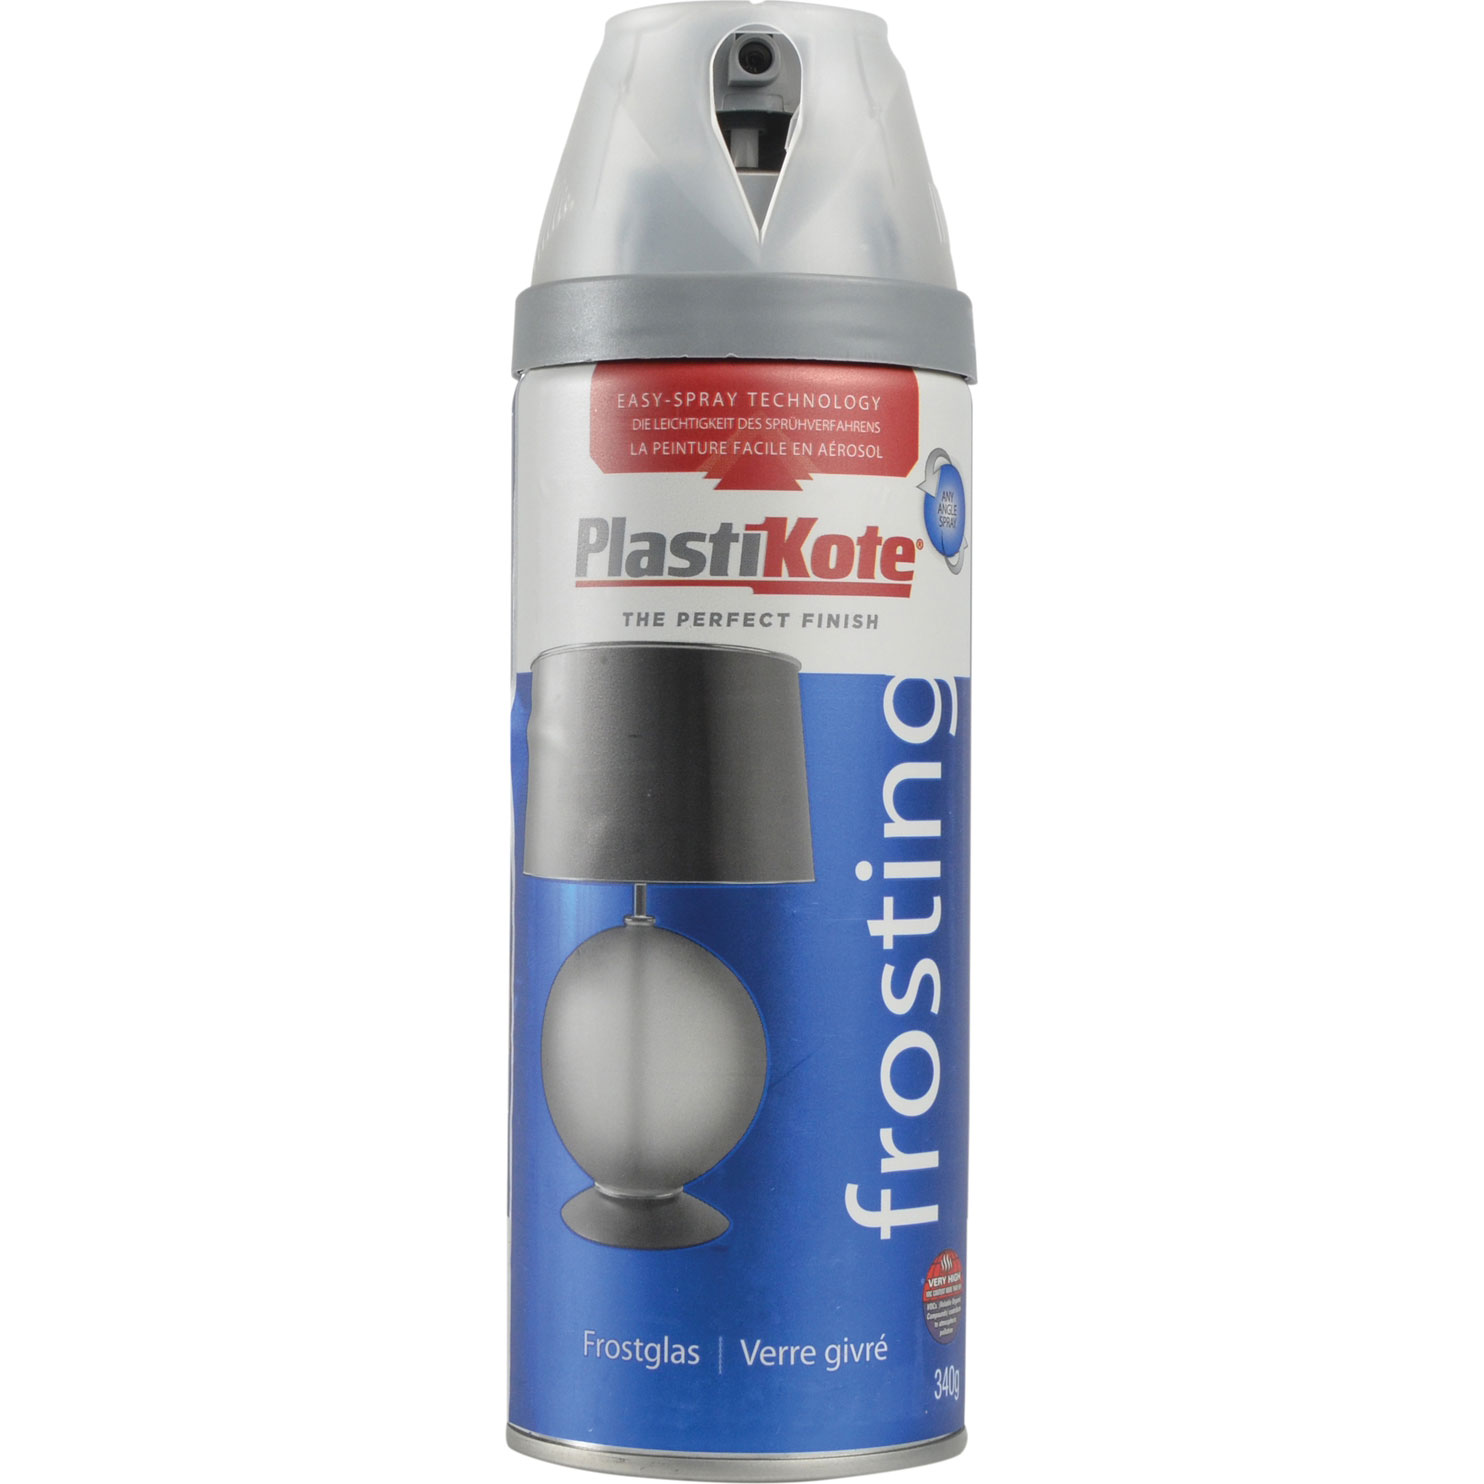 Plasti-kote 프로스팅(Frosting) 스프레이 400ml